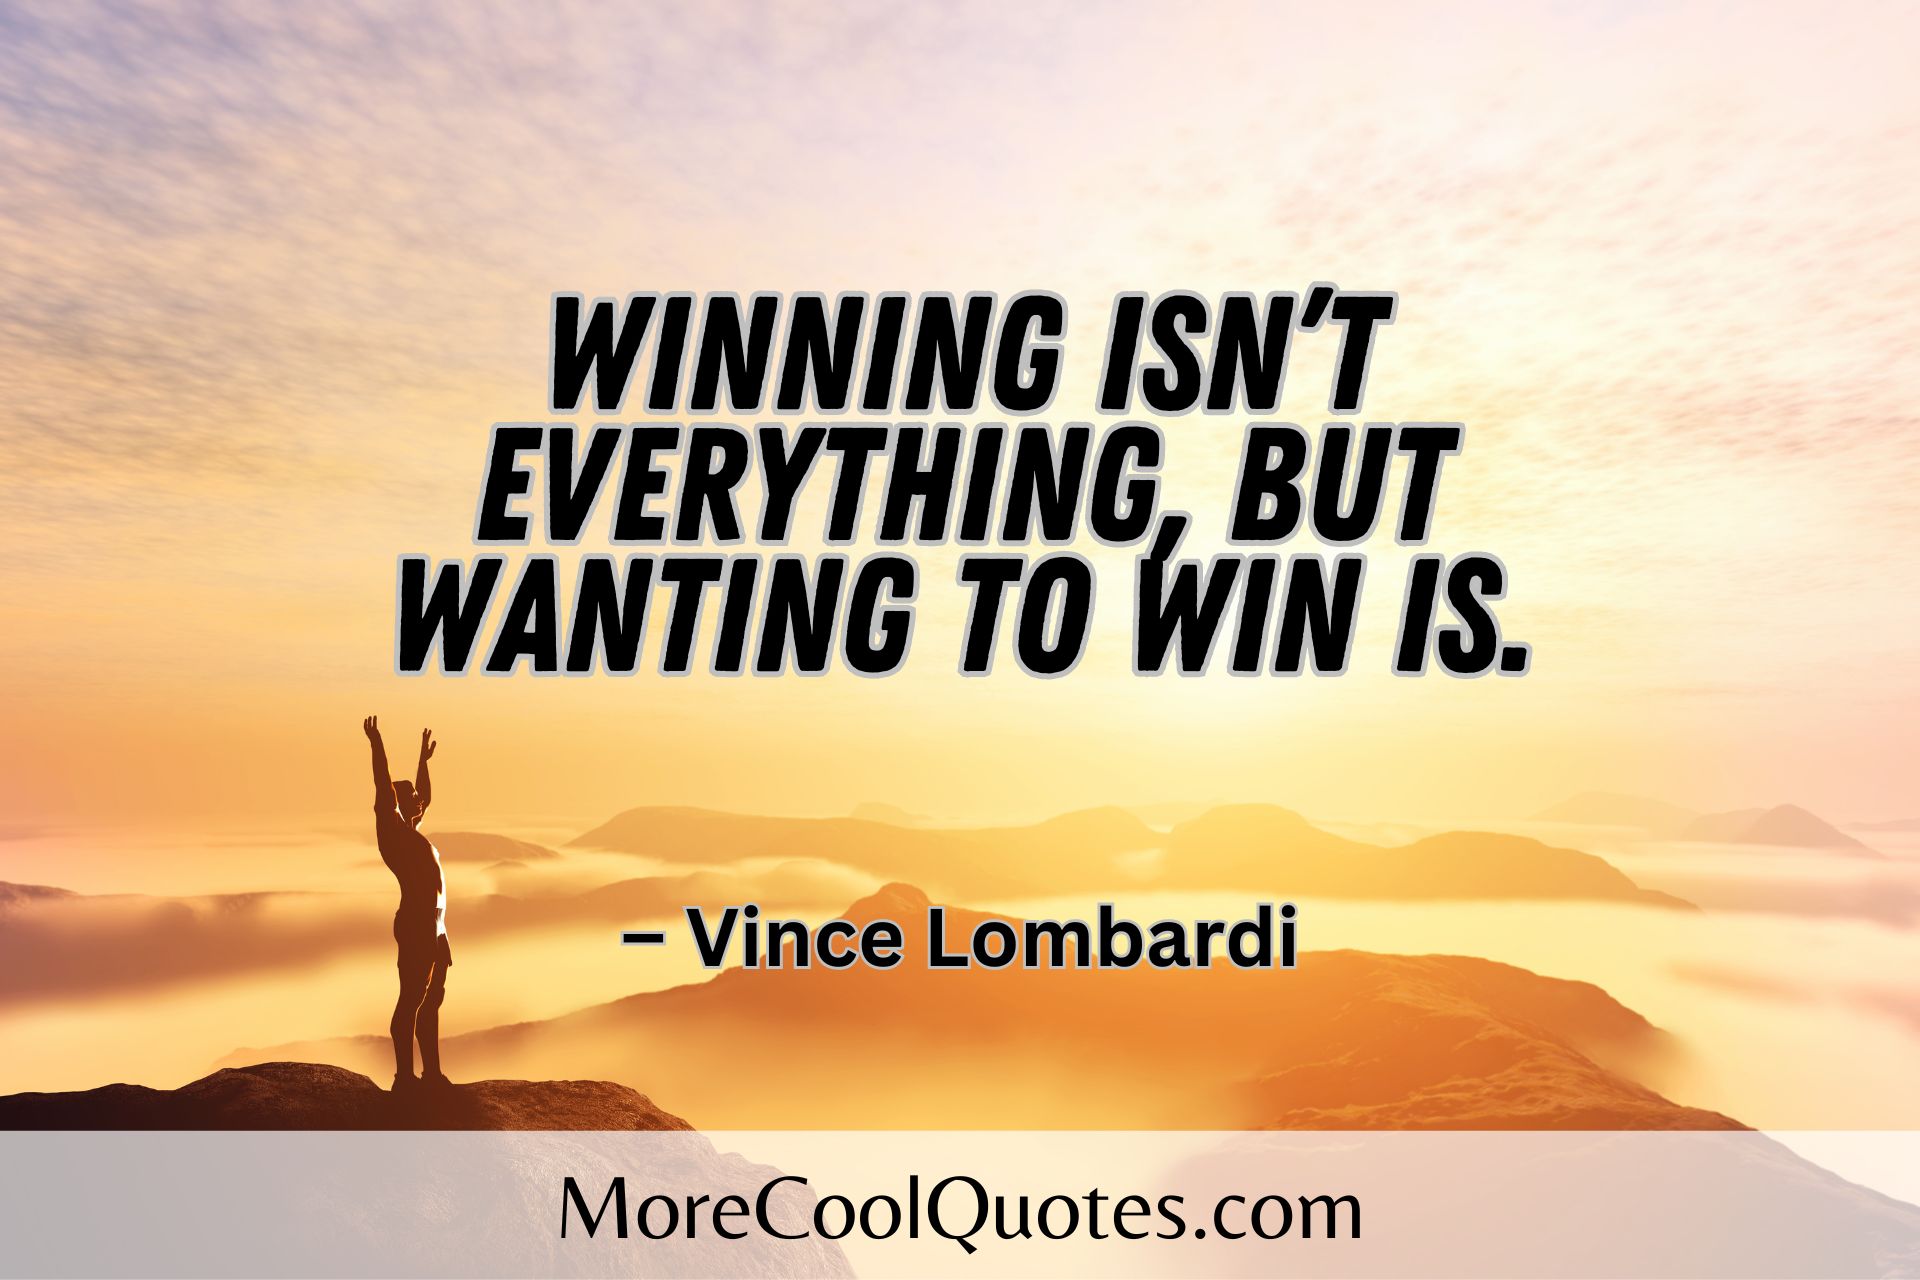 Winning isn’t everything